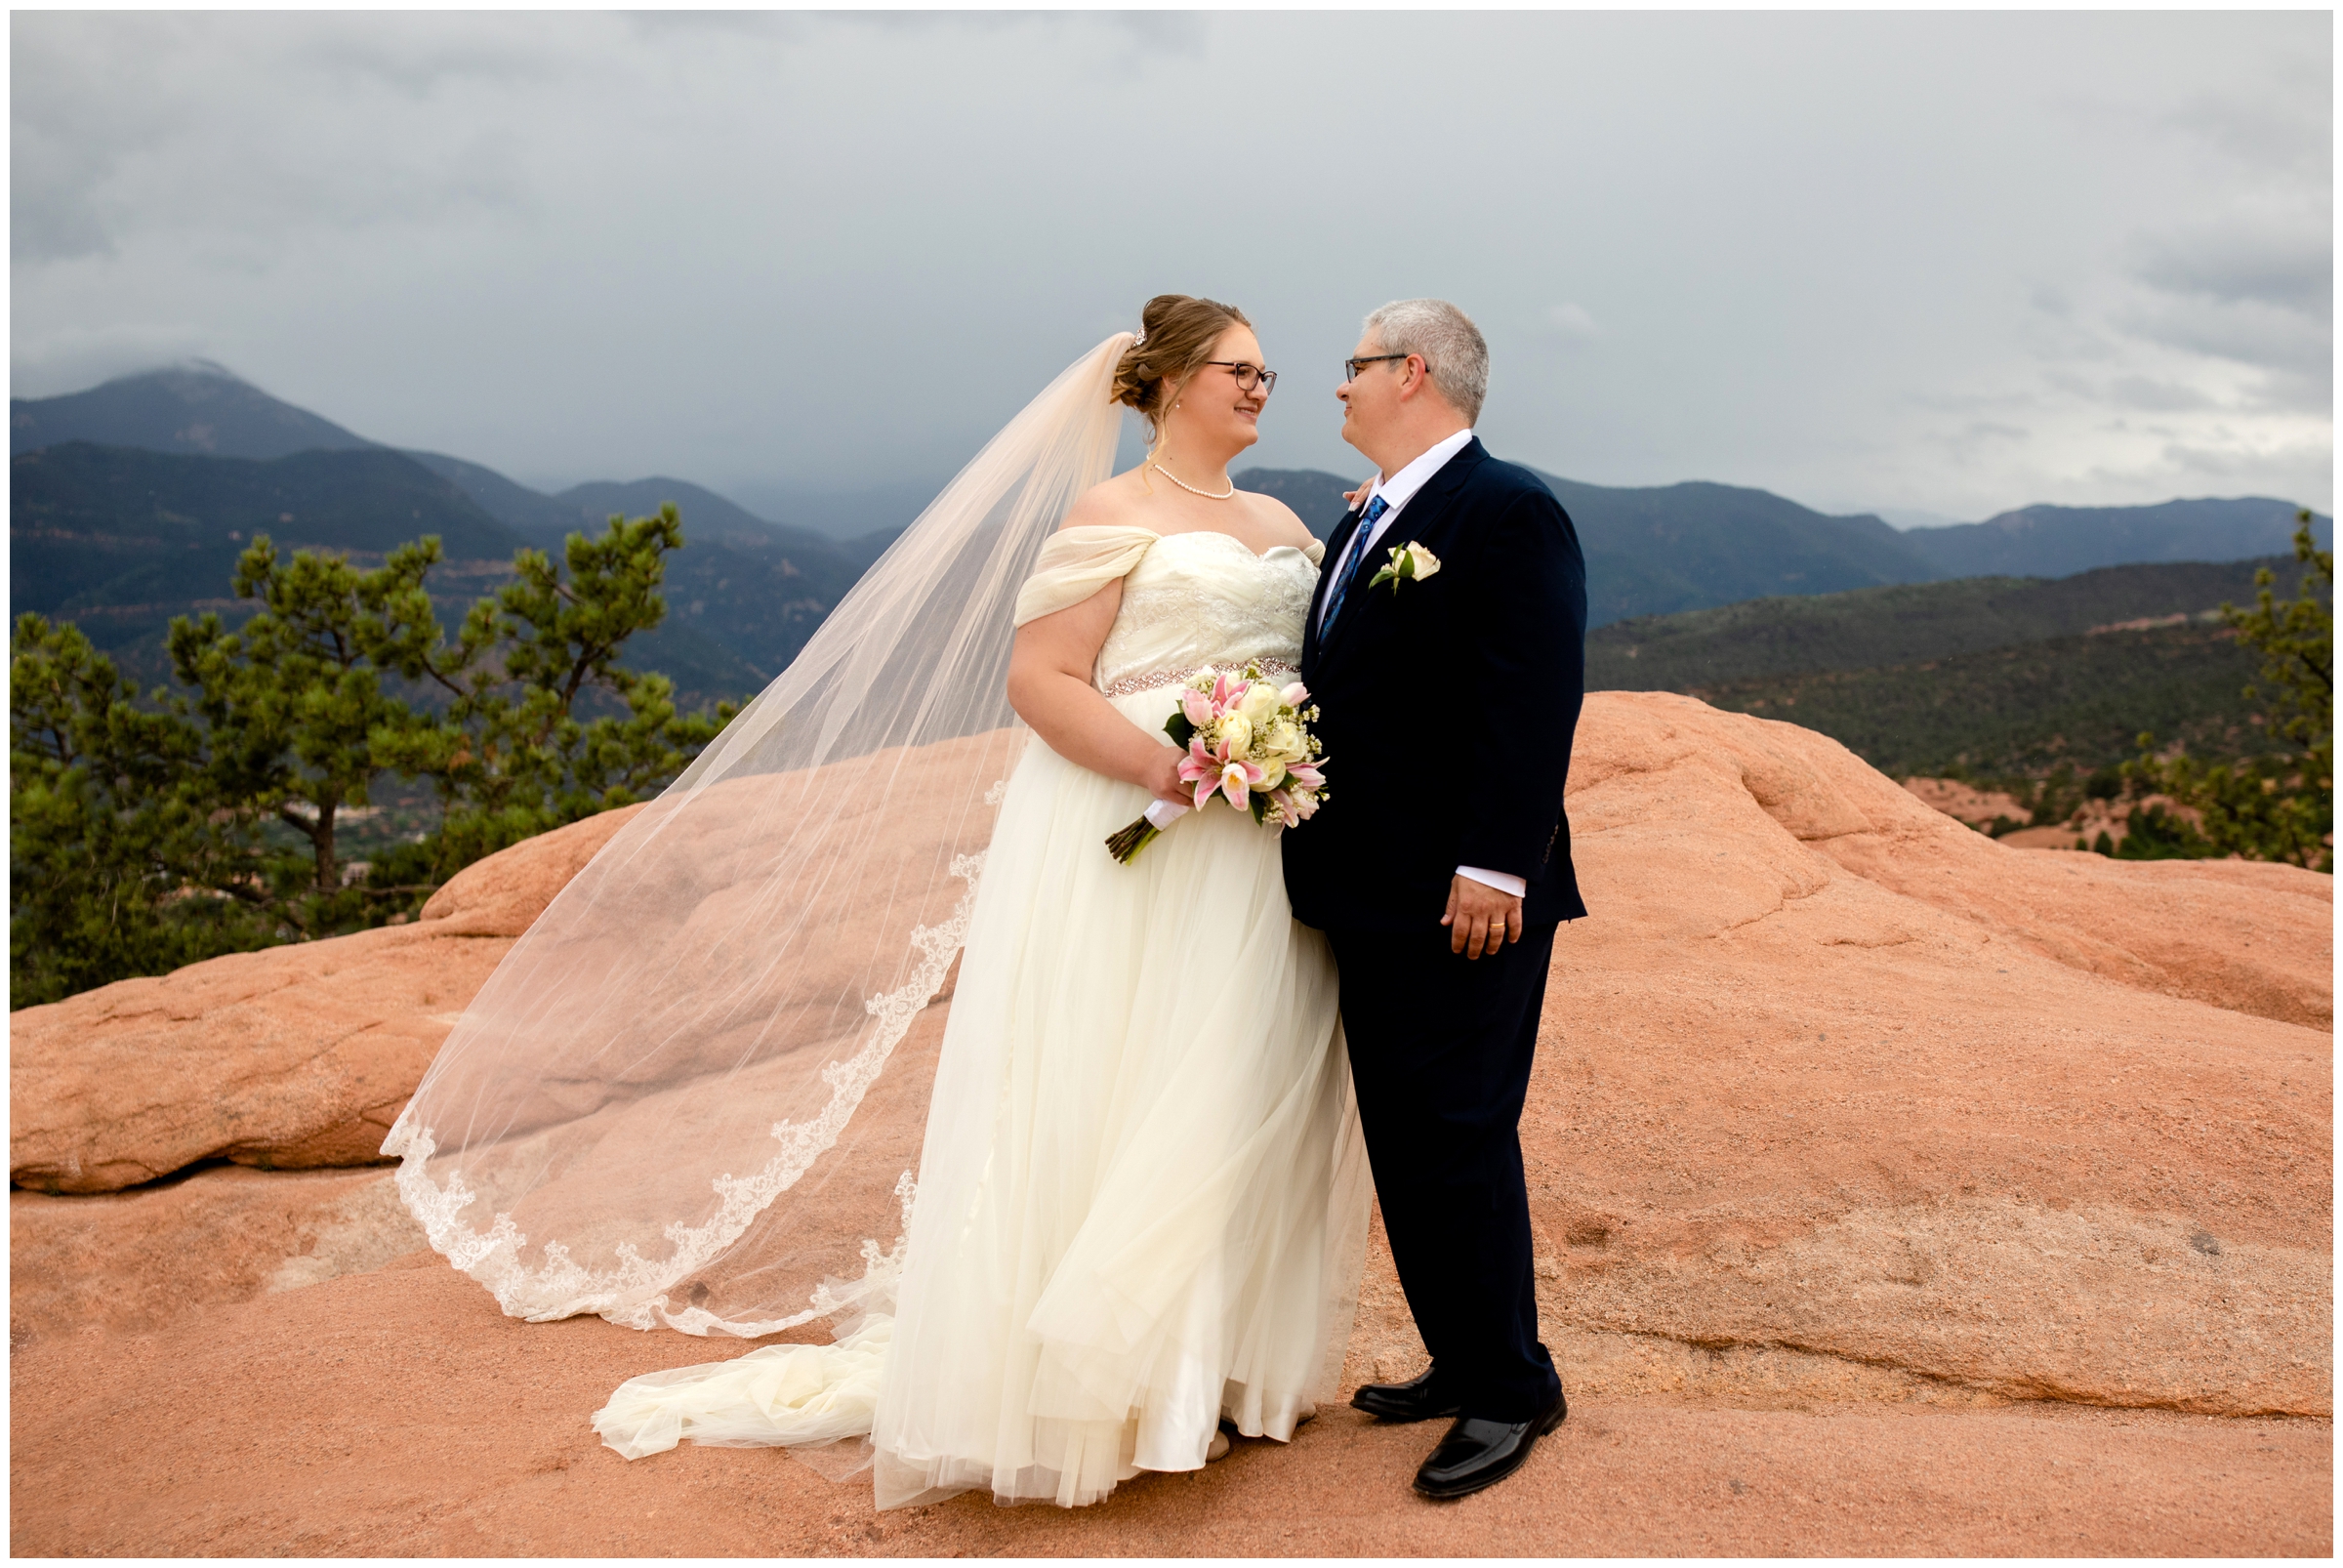 Garden of the Gods wedding photos and inspiration by Colorado springs photographer Plum Pretty Photography